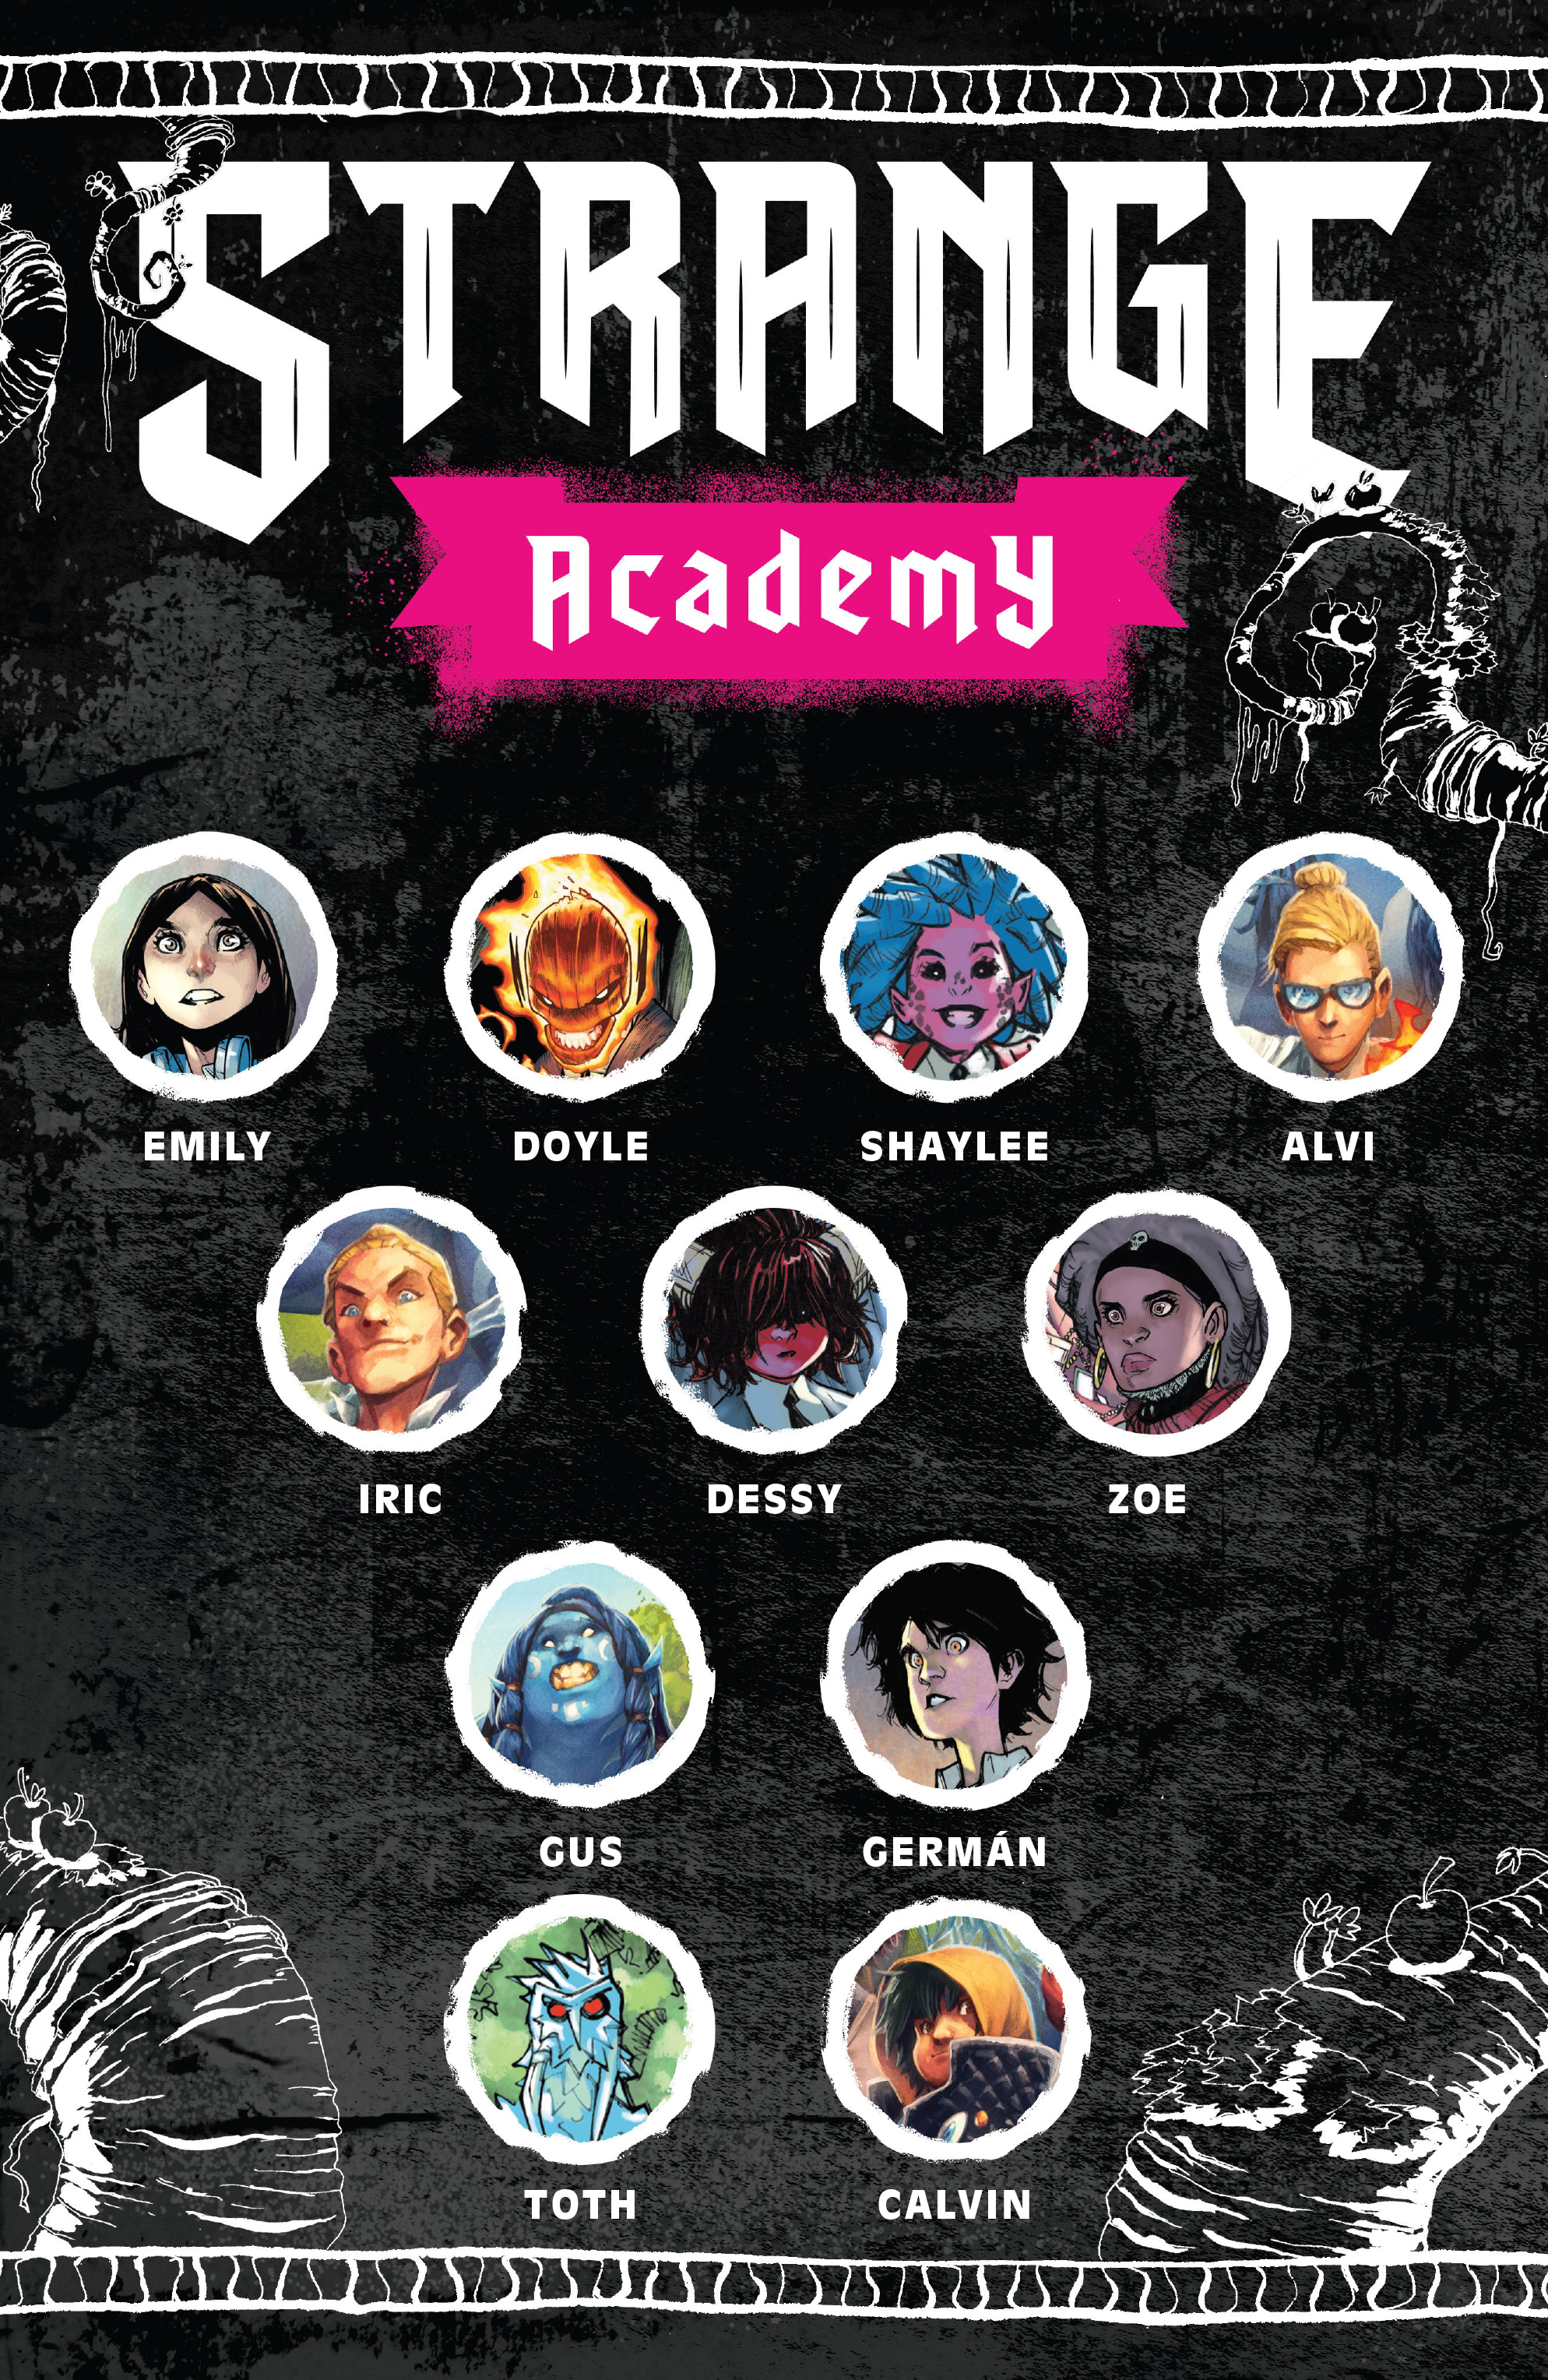 Read online Strange Academy comic -  Issue #2 - 3